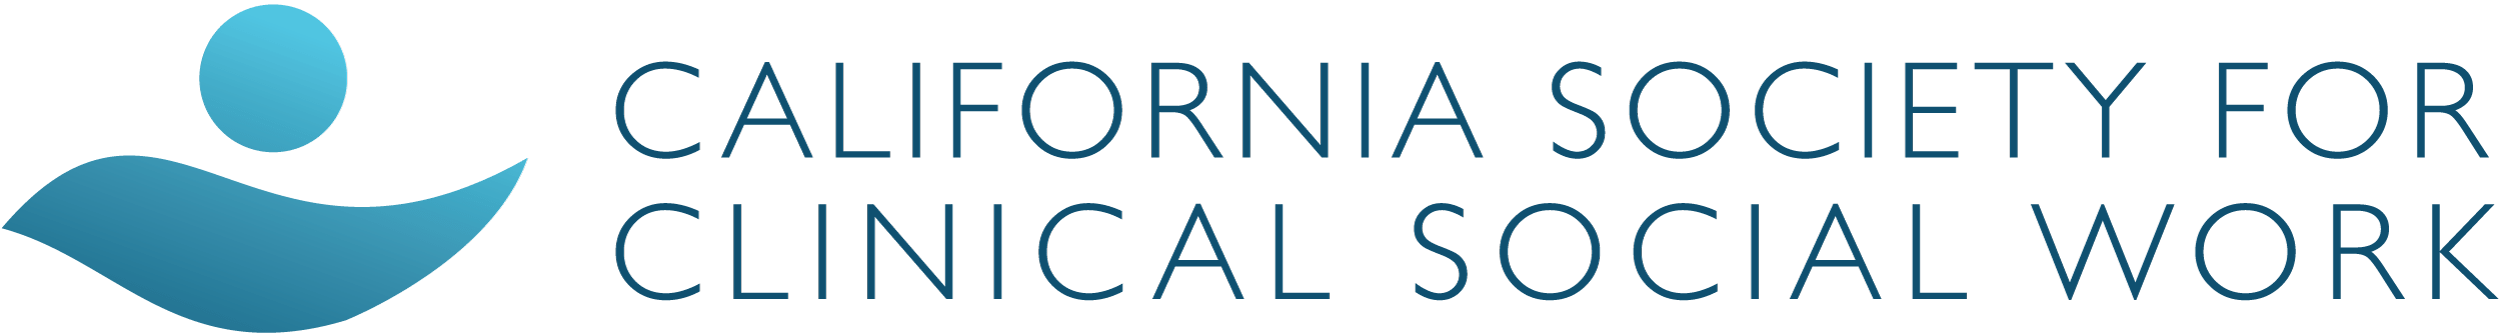 California Society for Clinical Social Work